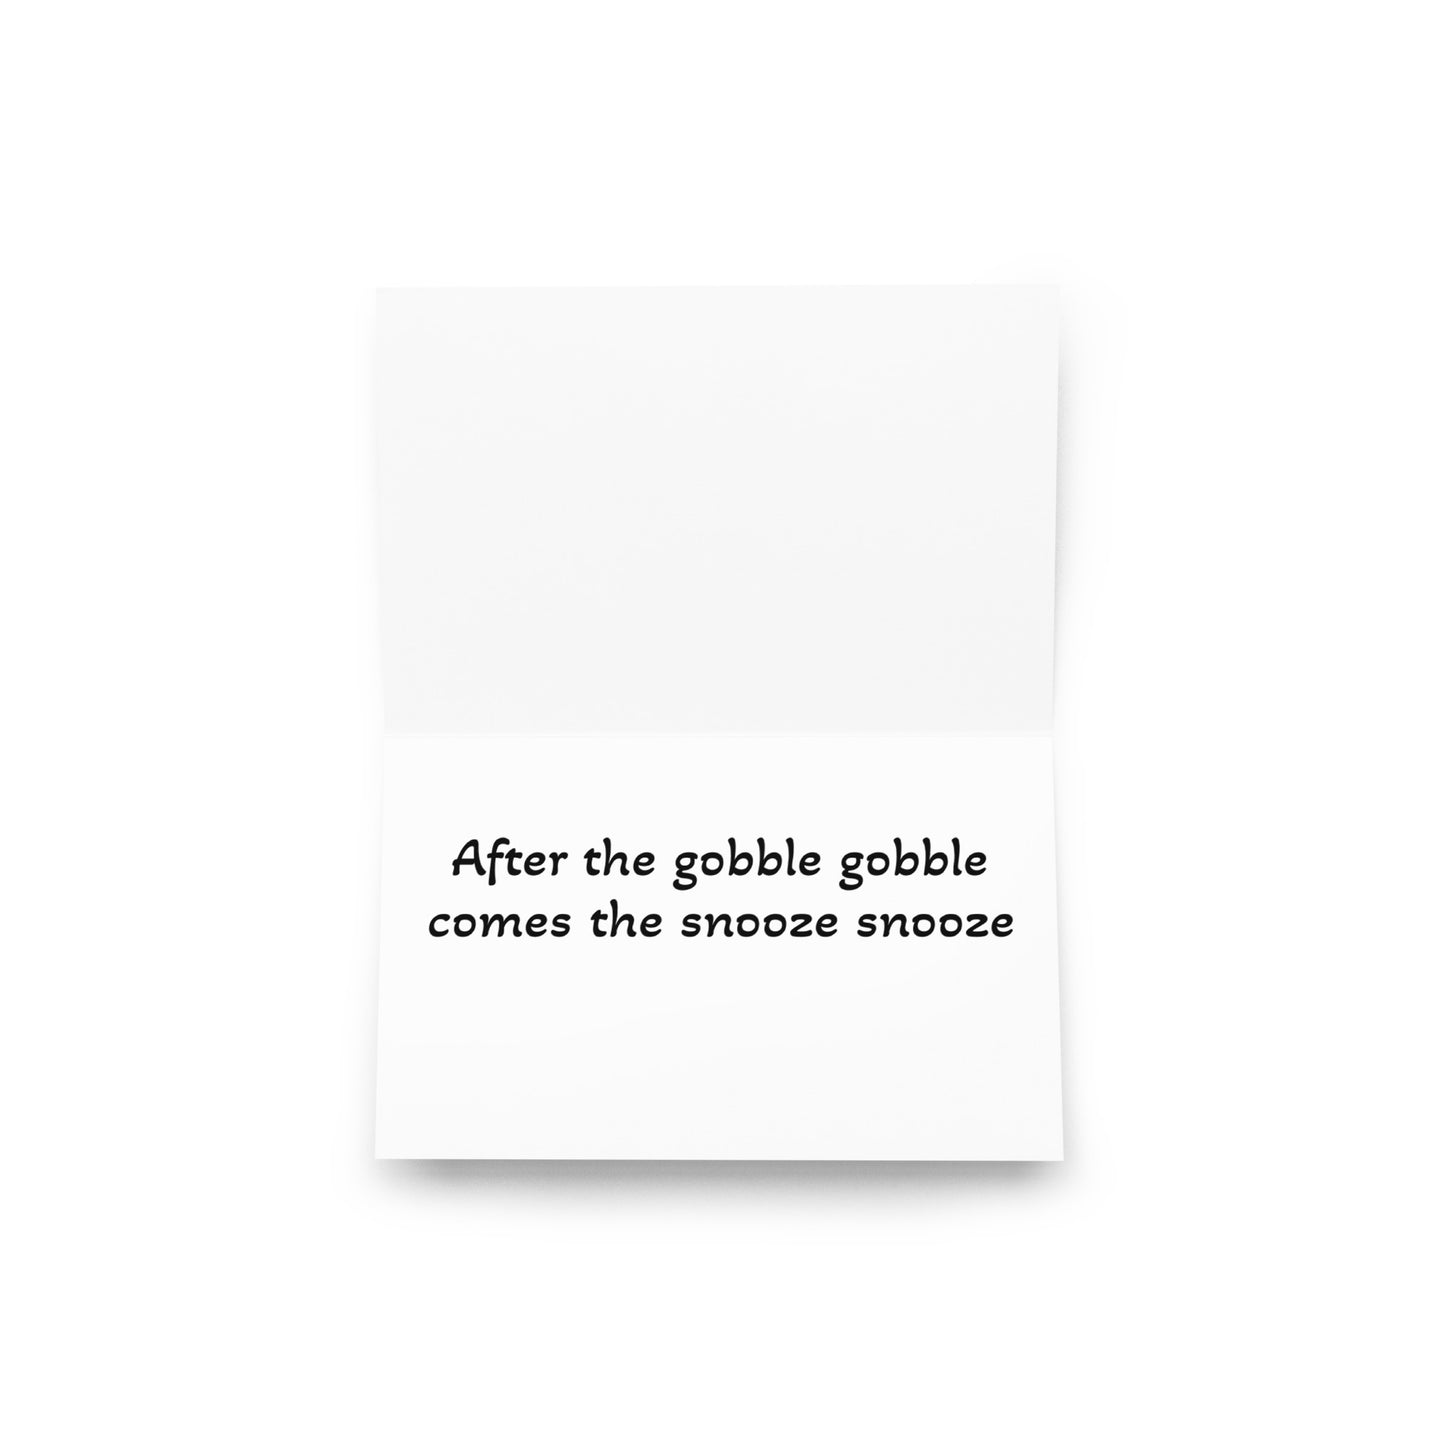 Gobble til you Wobble Greeting card